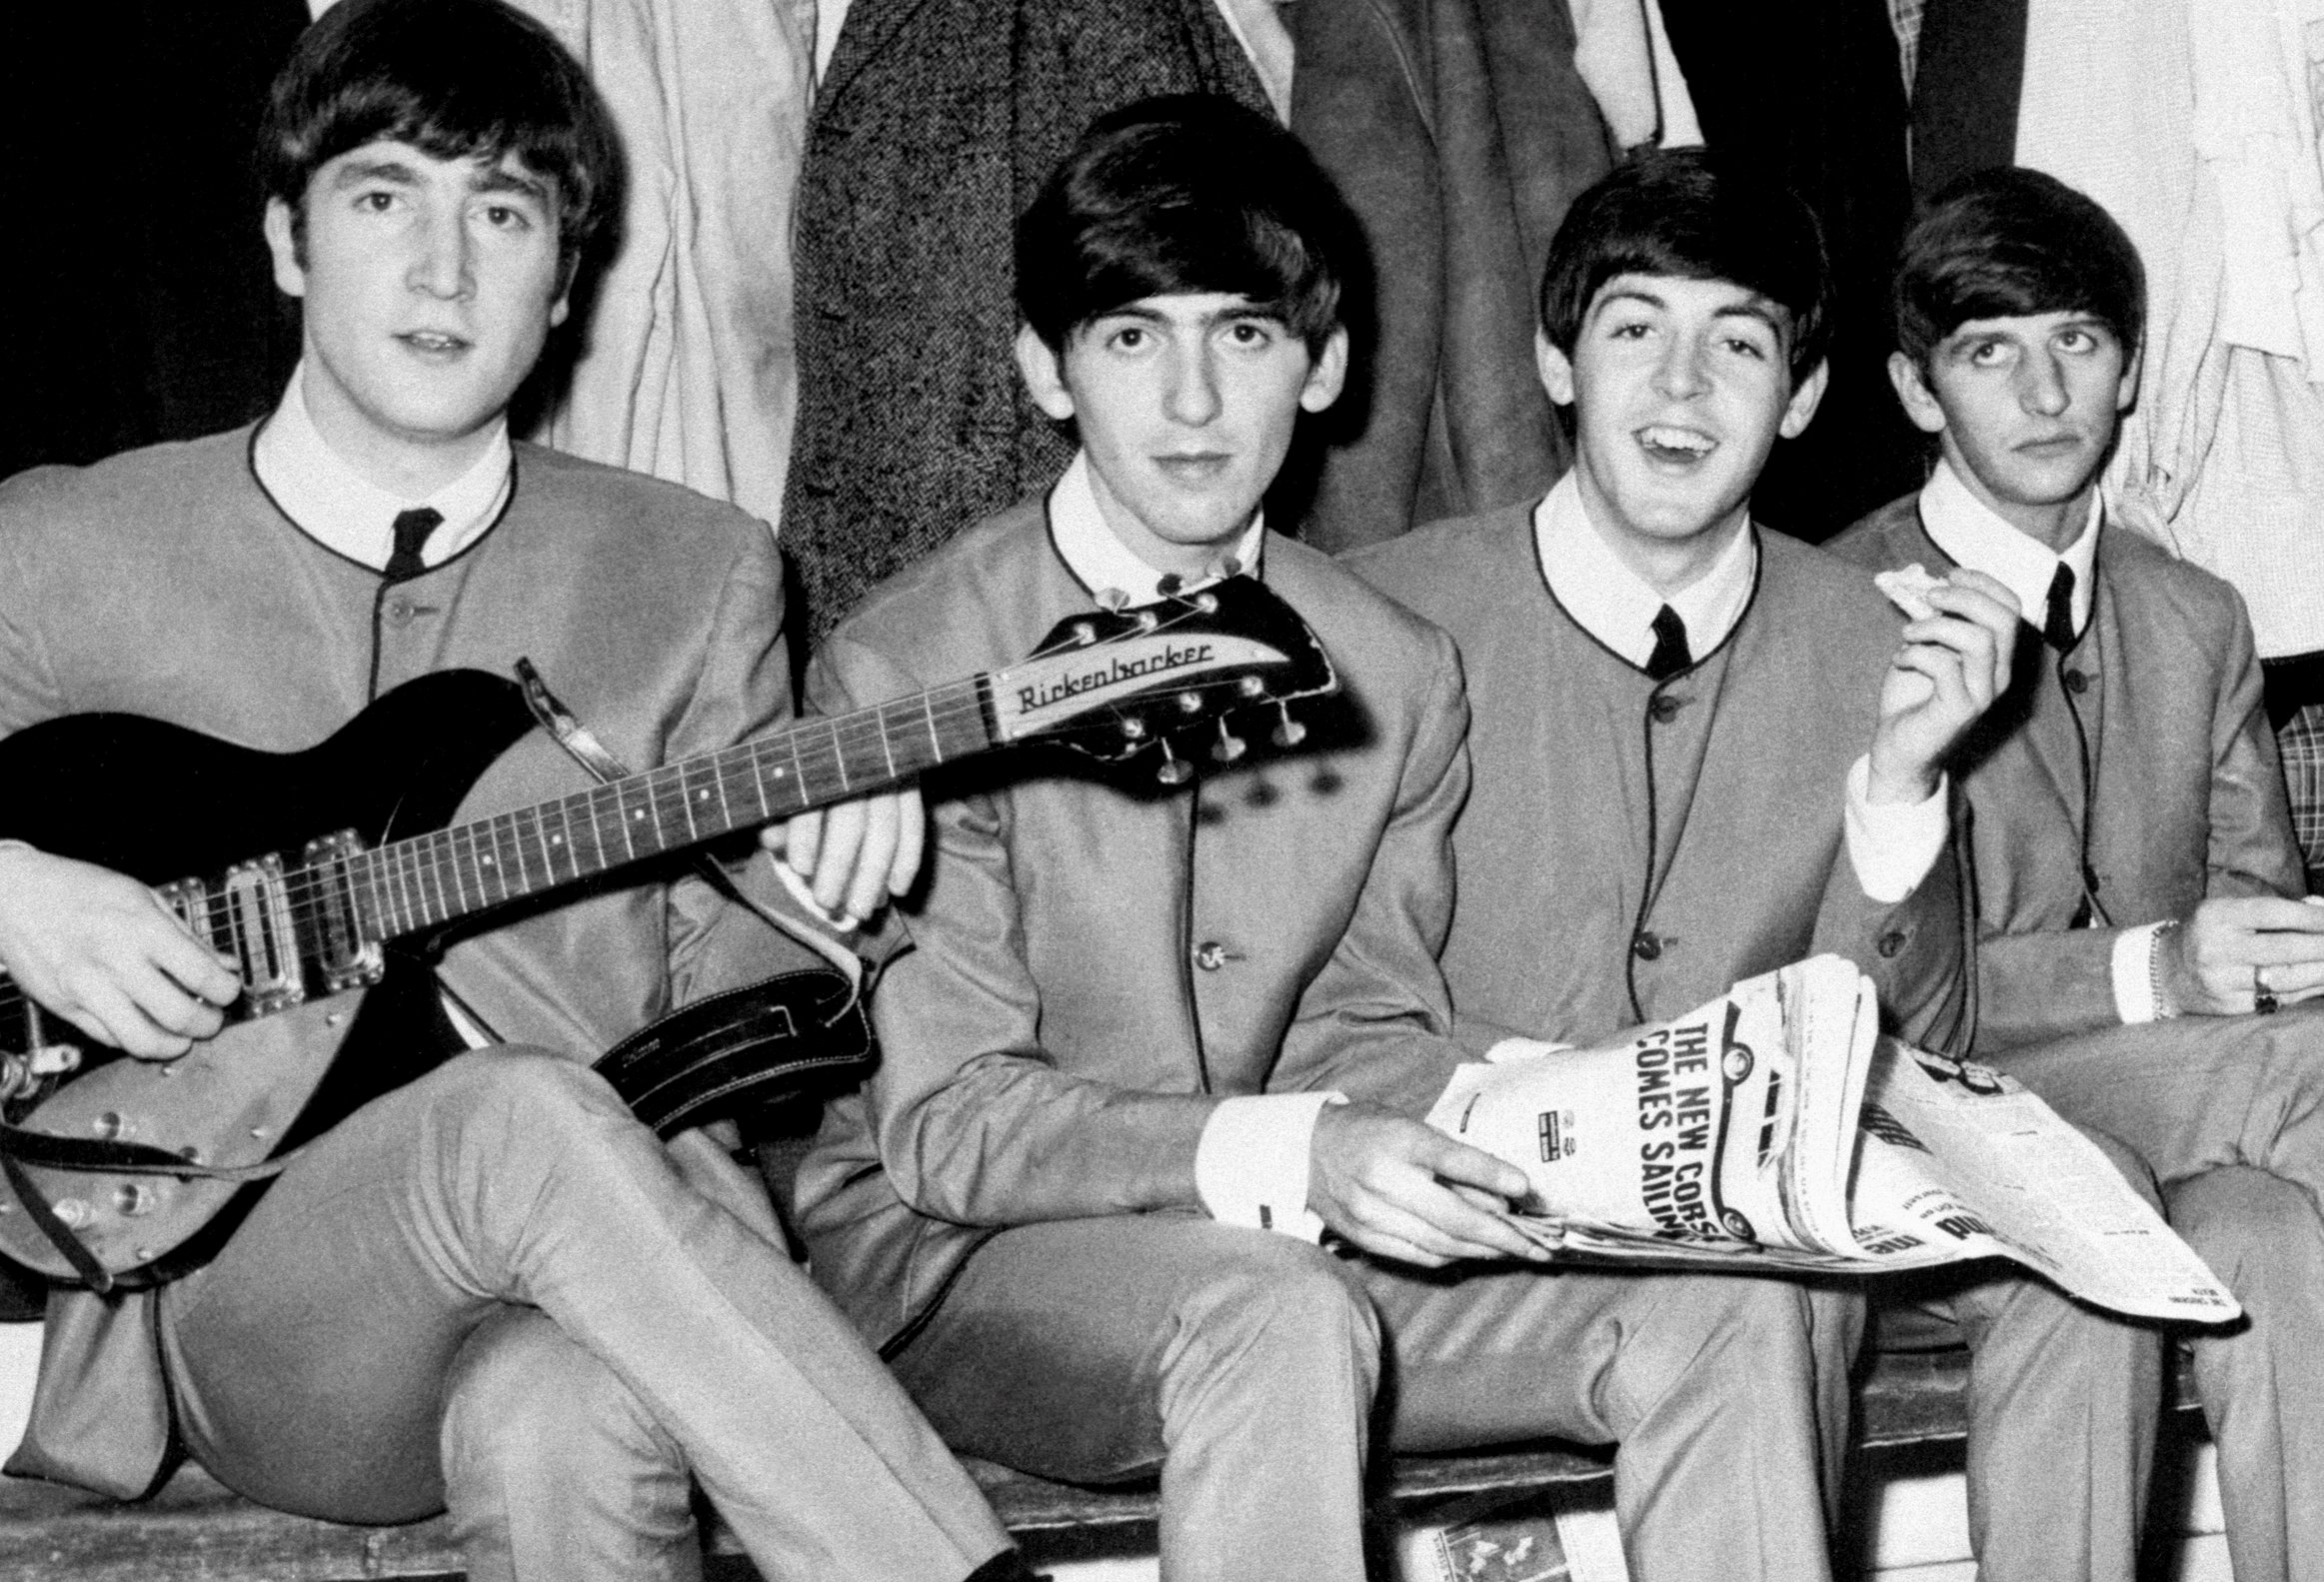 The Beatles' John Lennon, George Harrison, Paul McCartney, and Ringo Starr sitting on a bench